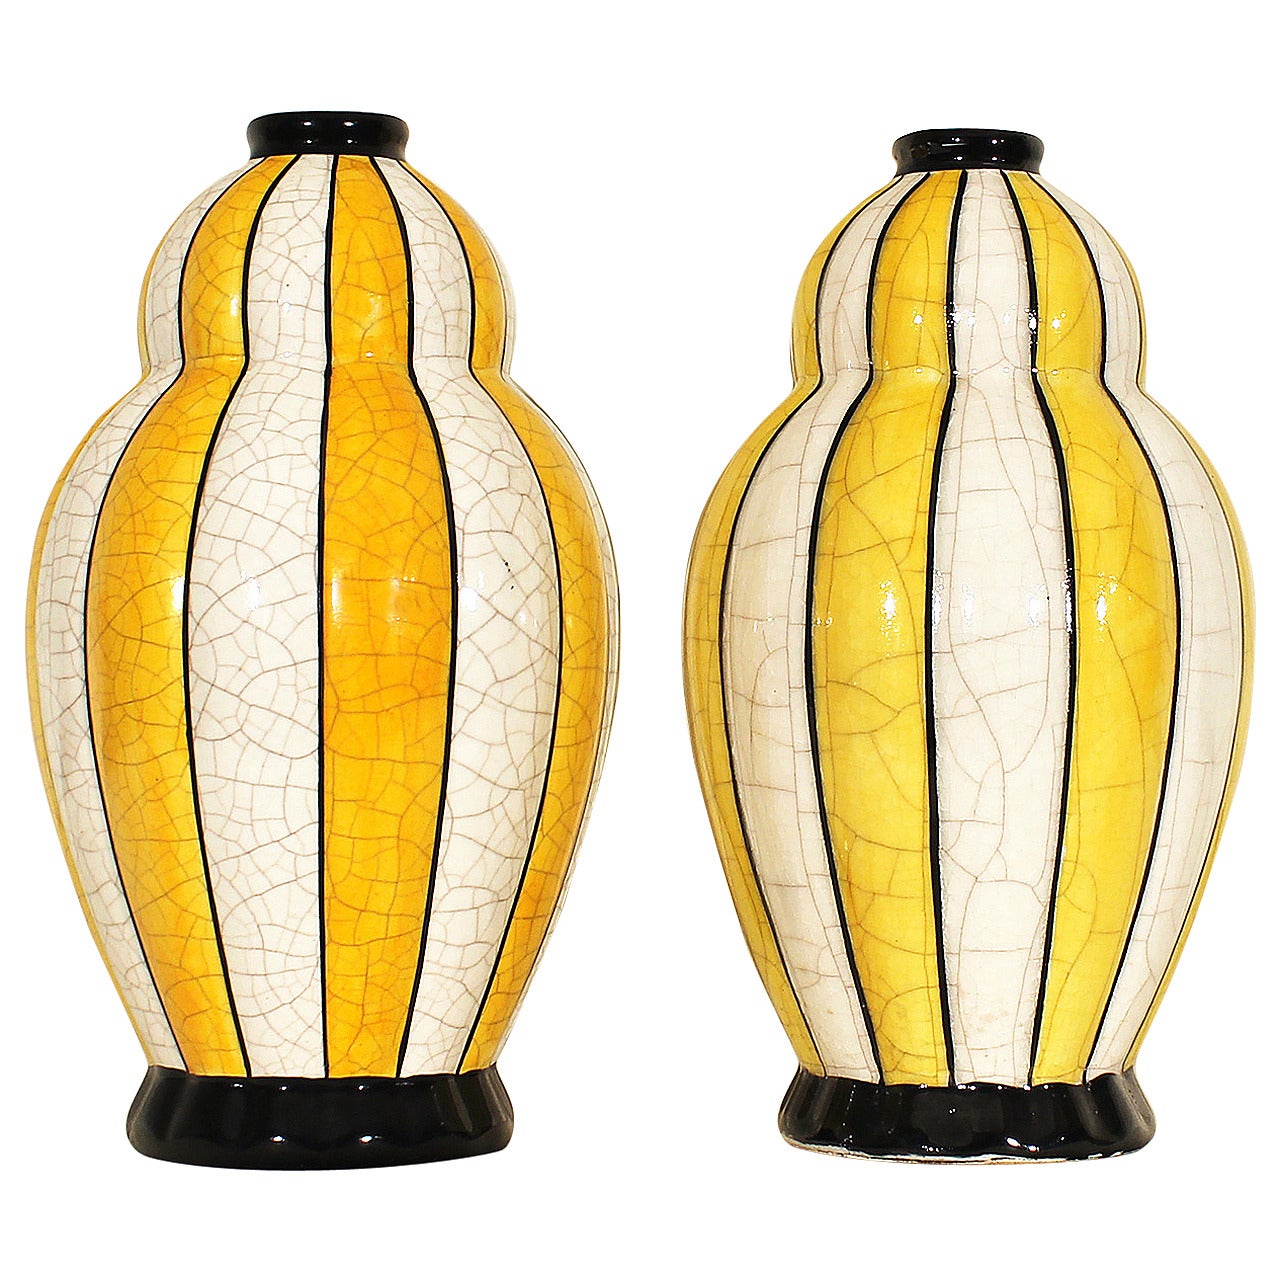 1930s Charles Catteau, Boch Keramis - Two Art Deco vases, ceramic - Belgium